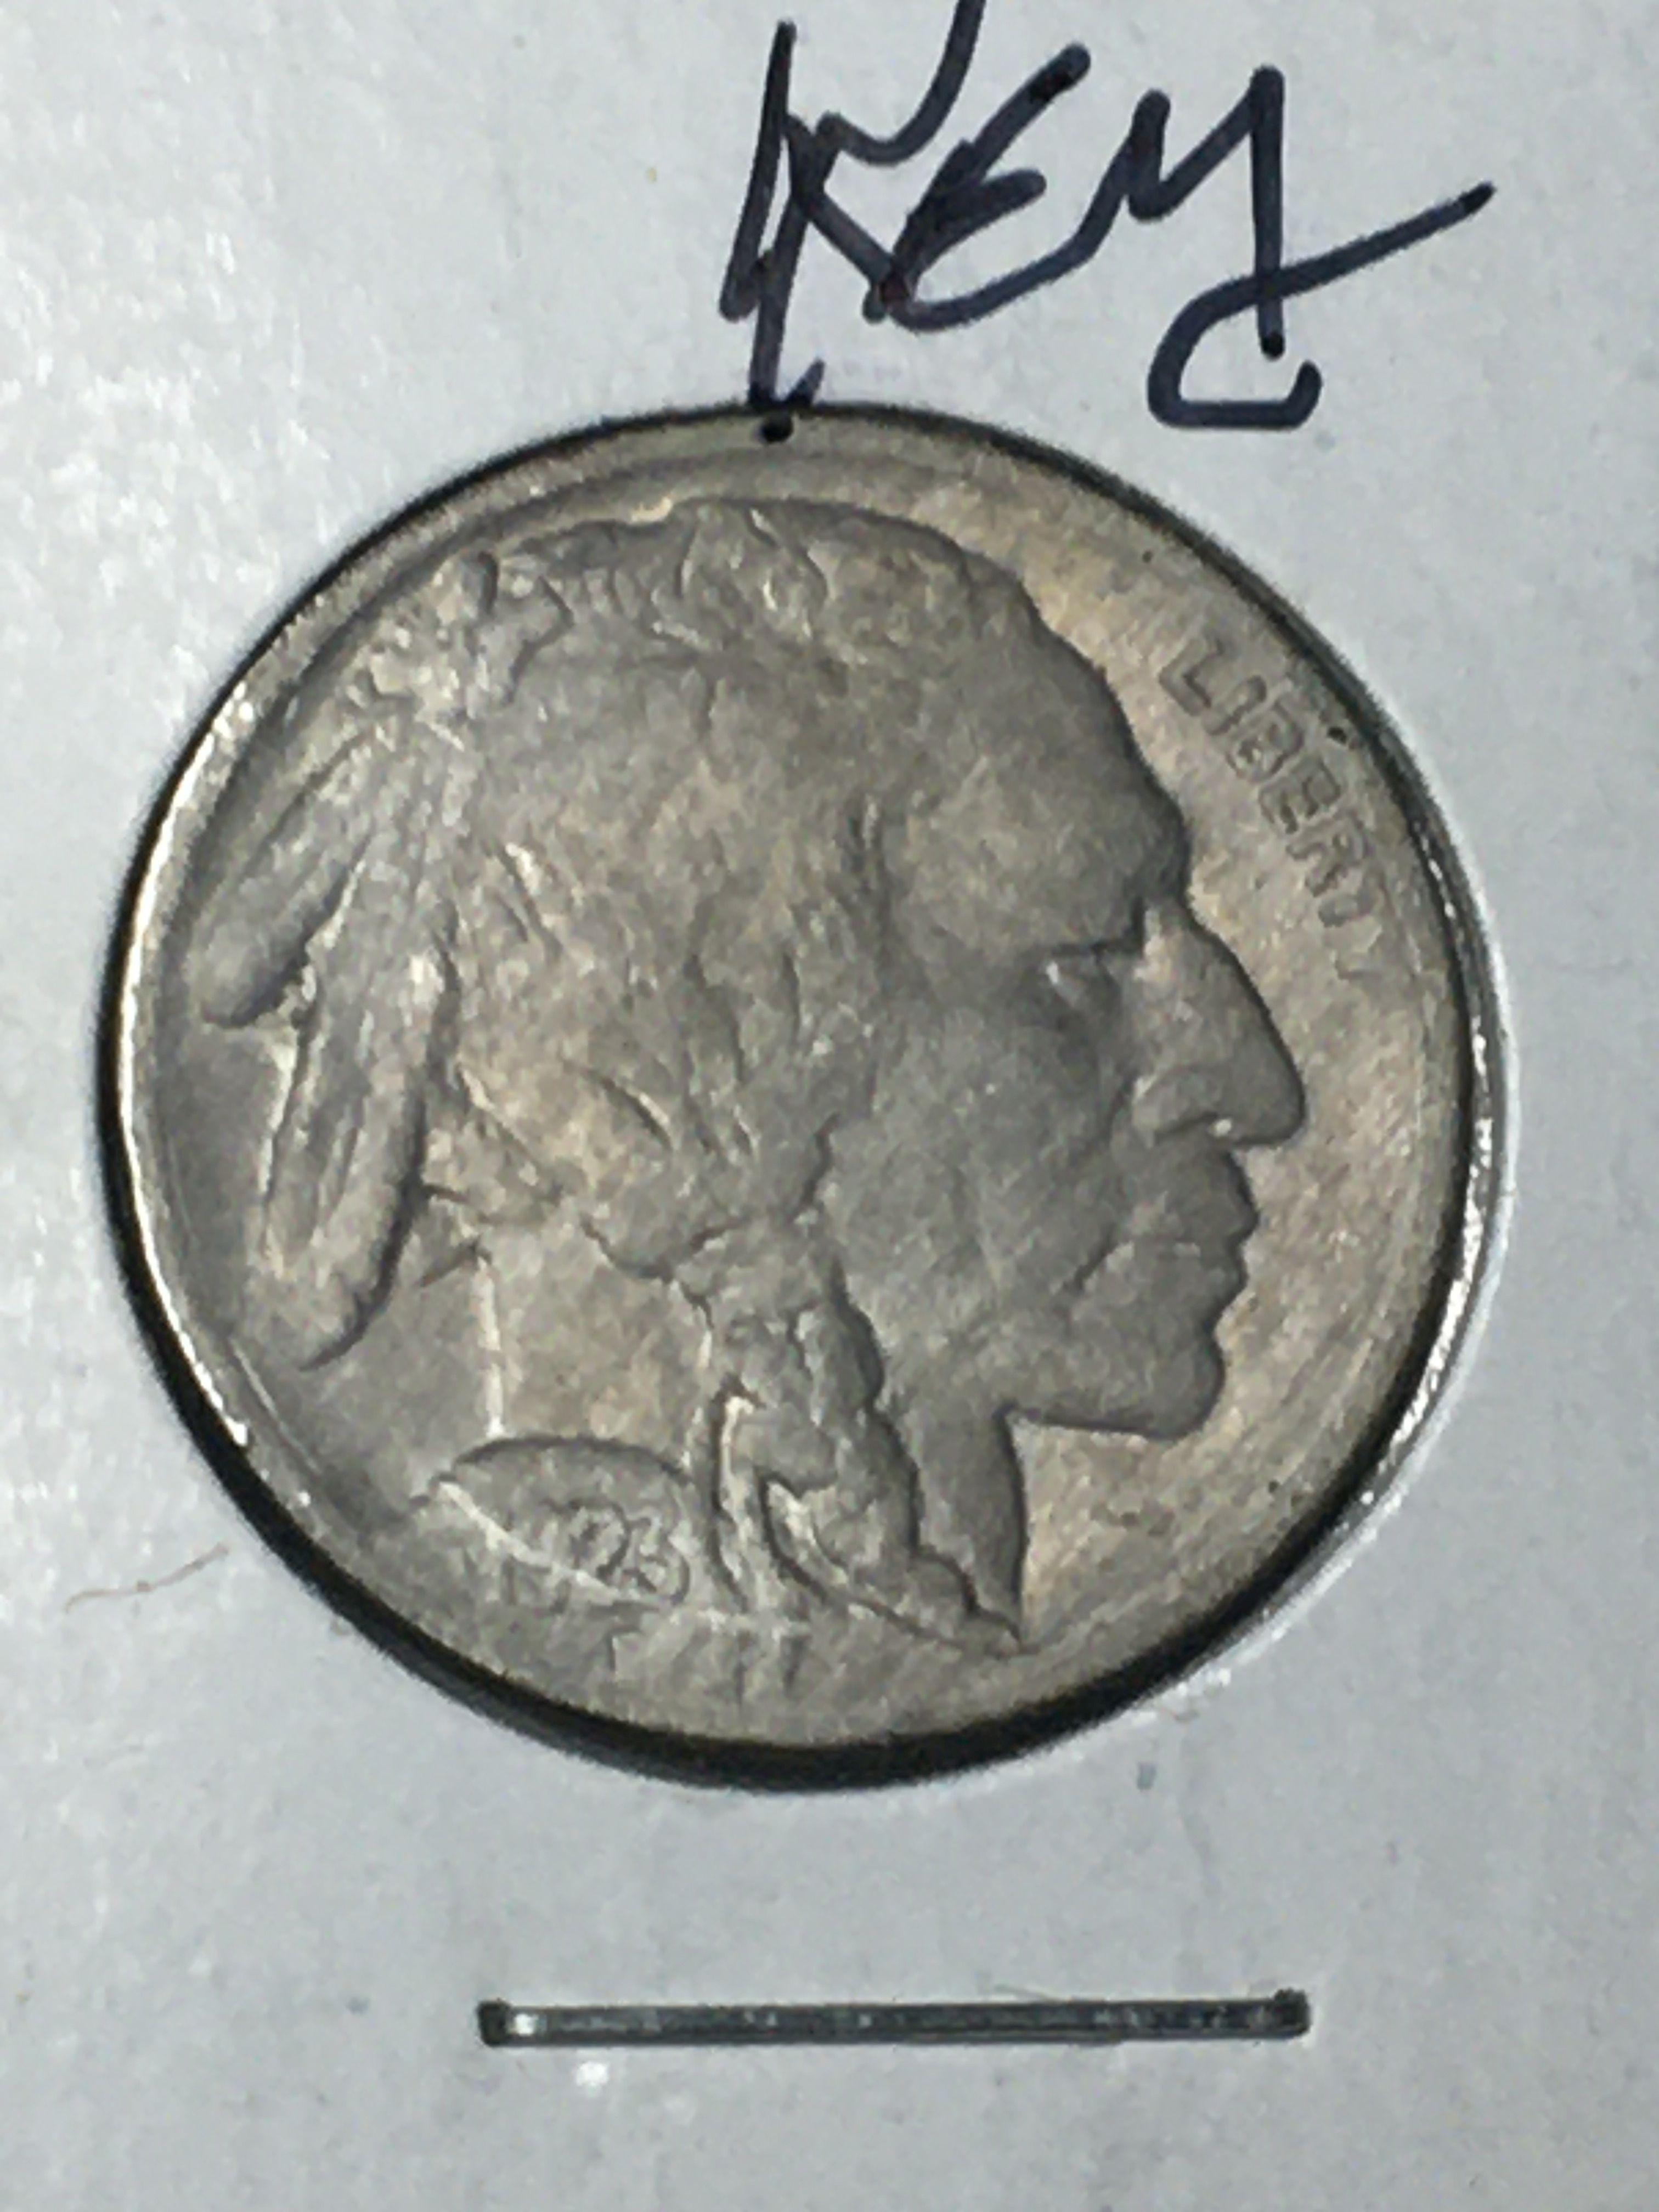 1923 P Buffalo Nickel